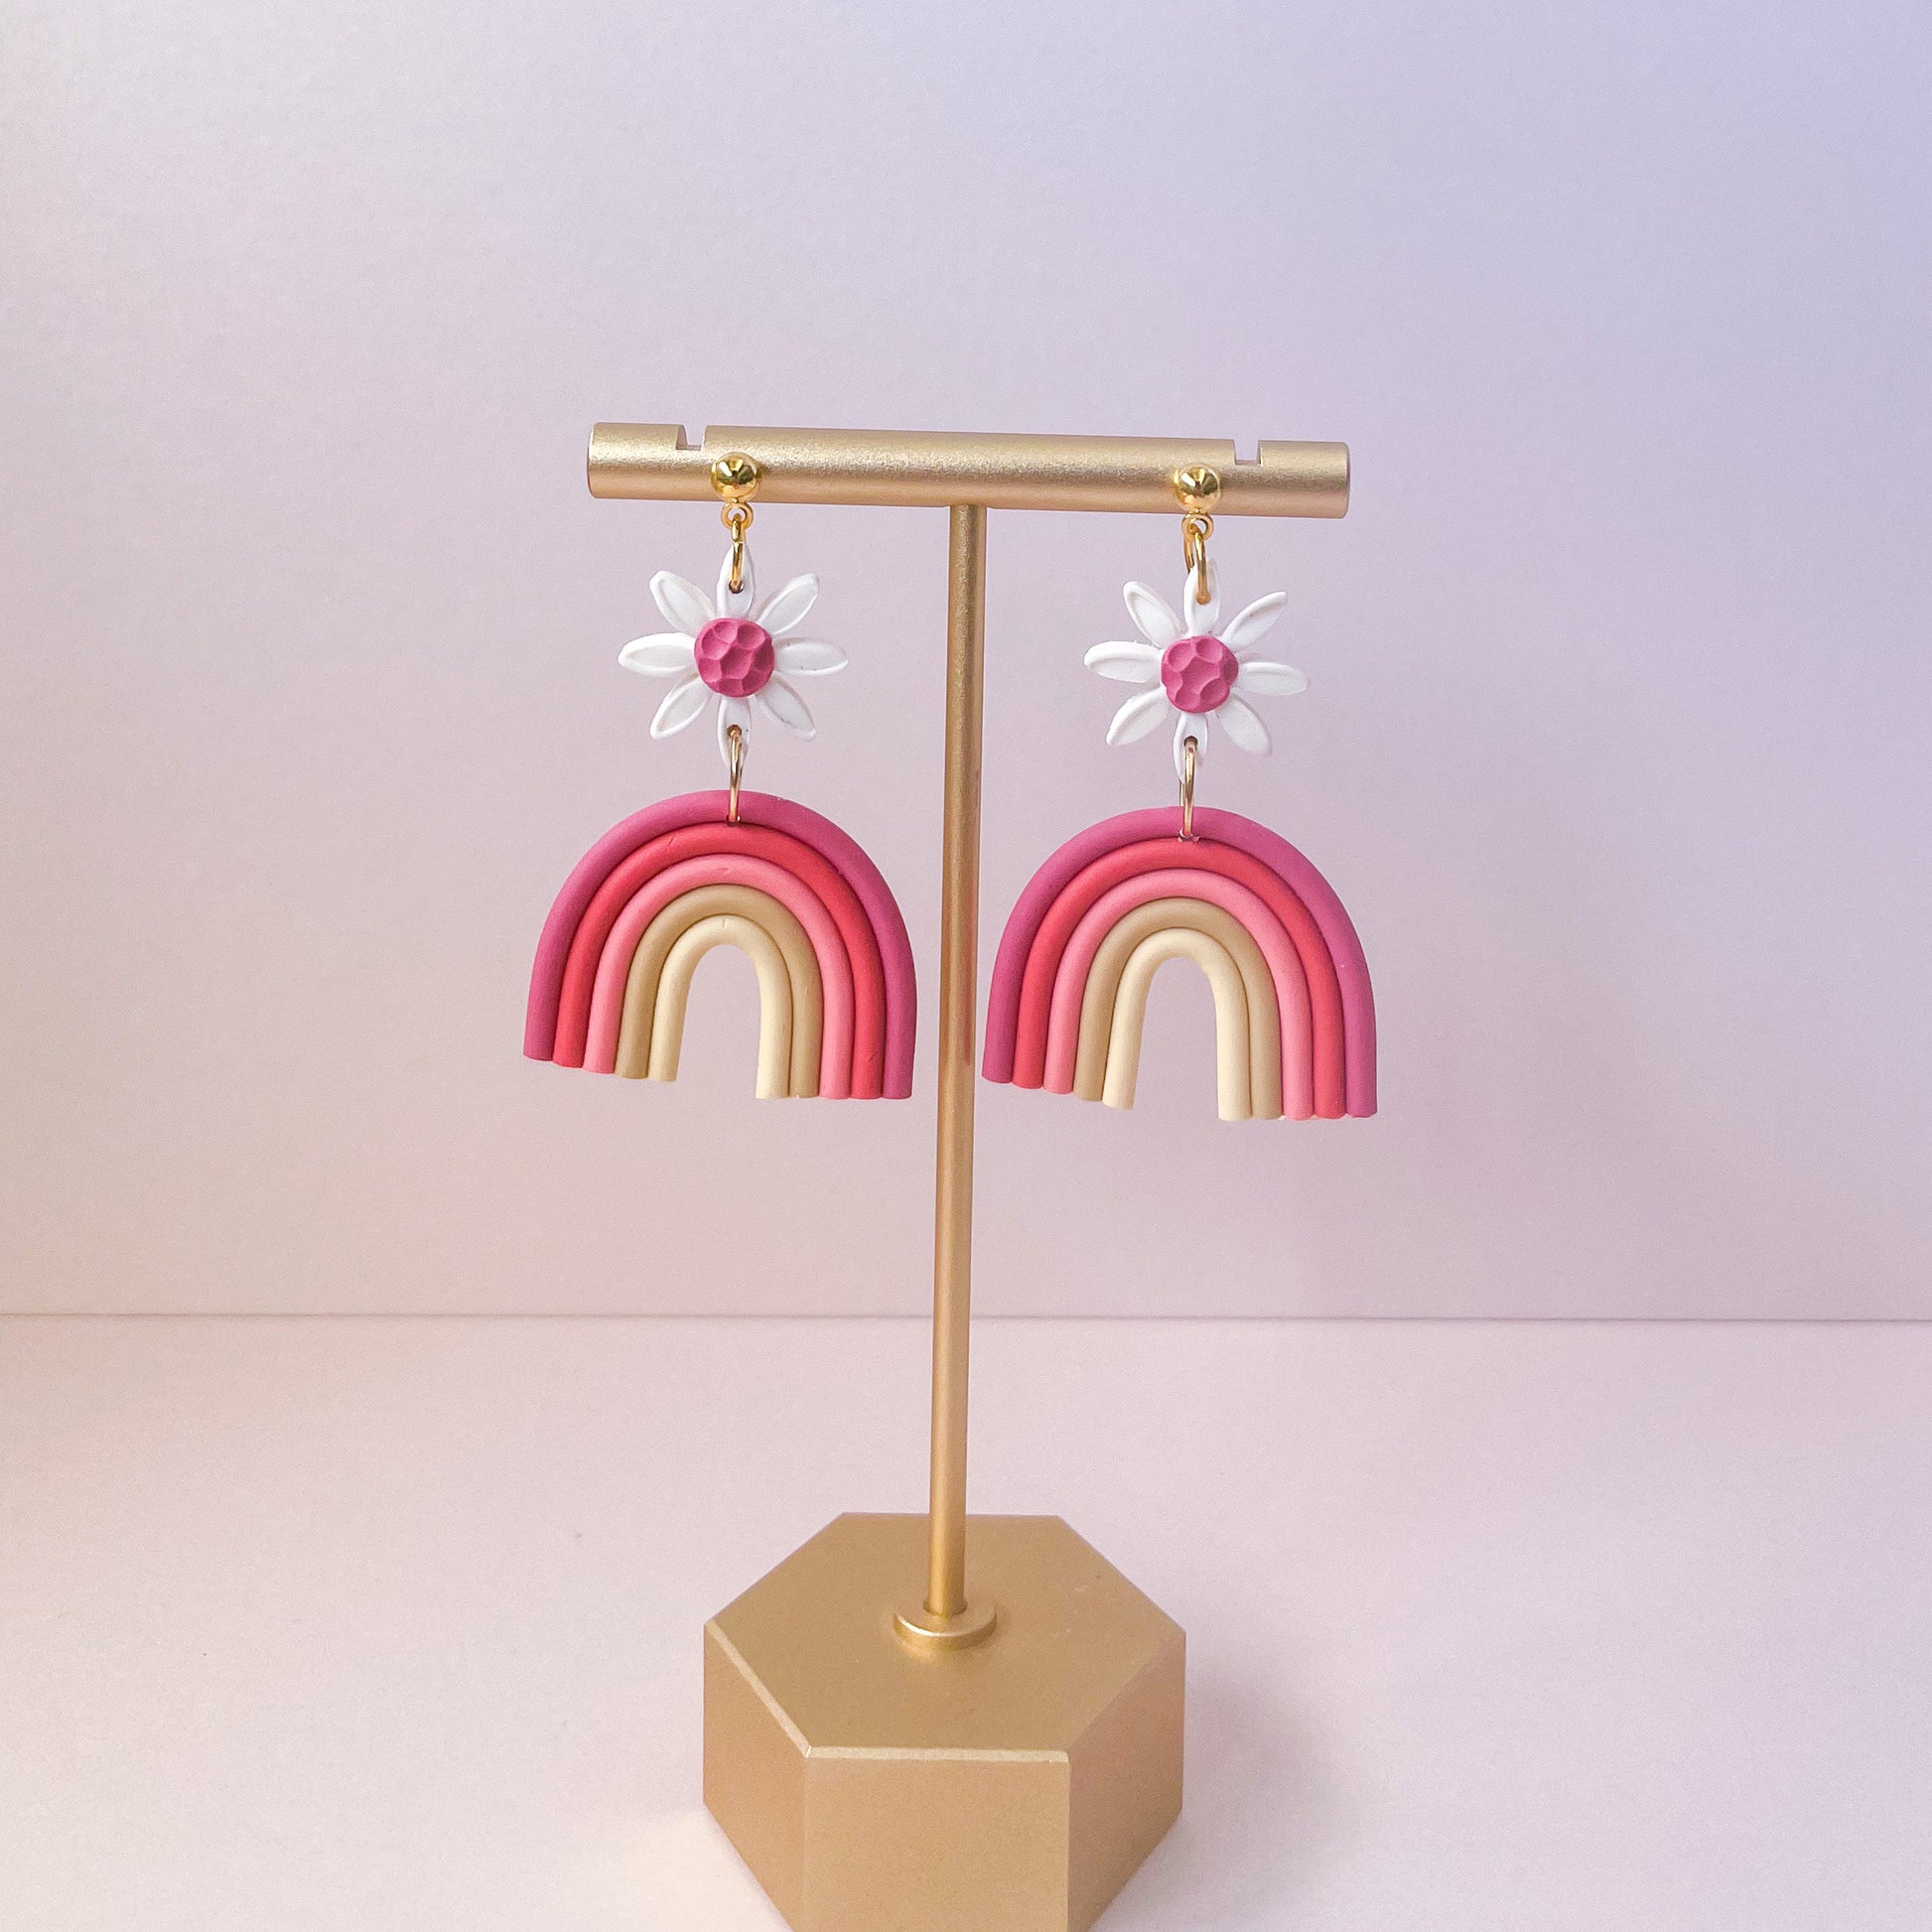 Summer Rainbow Flower Earrings//Rainbow Polymer Clay Earrings//handmade earrings //statement earrings //rainbow earrings